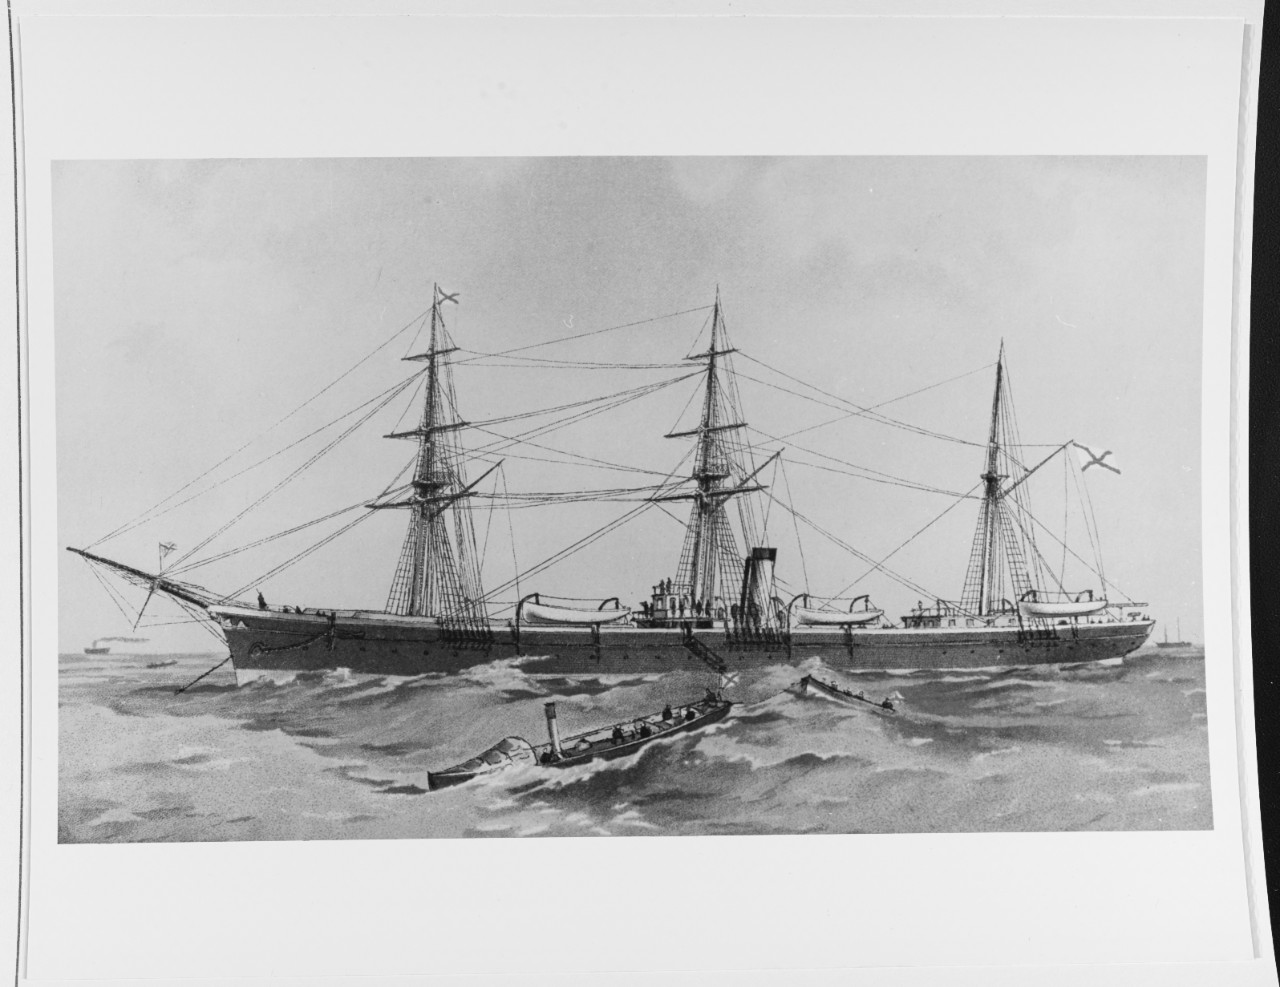 ASIA (Russian cruiser, 1874)